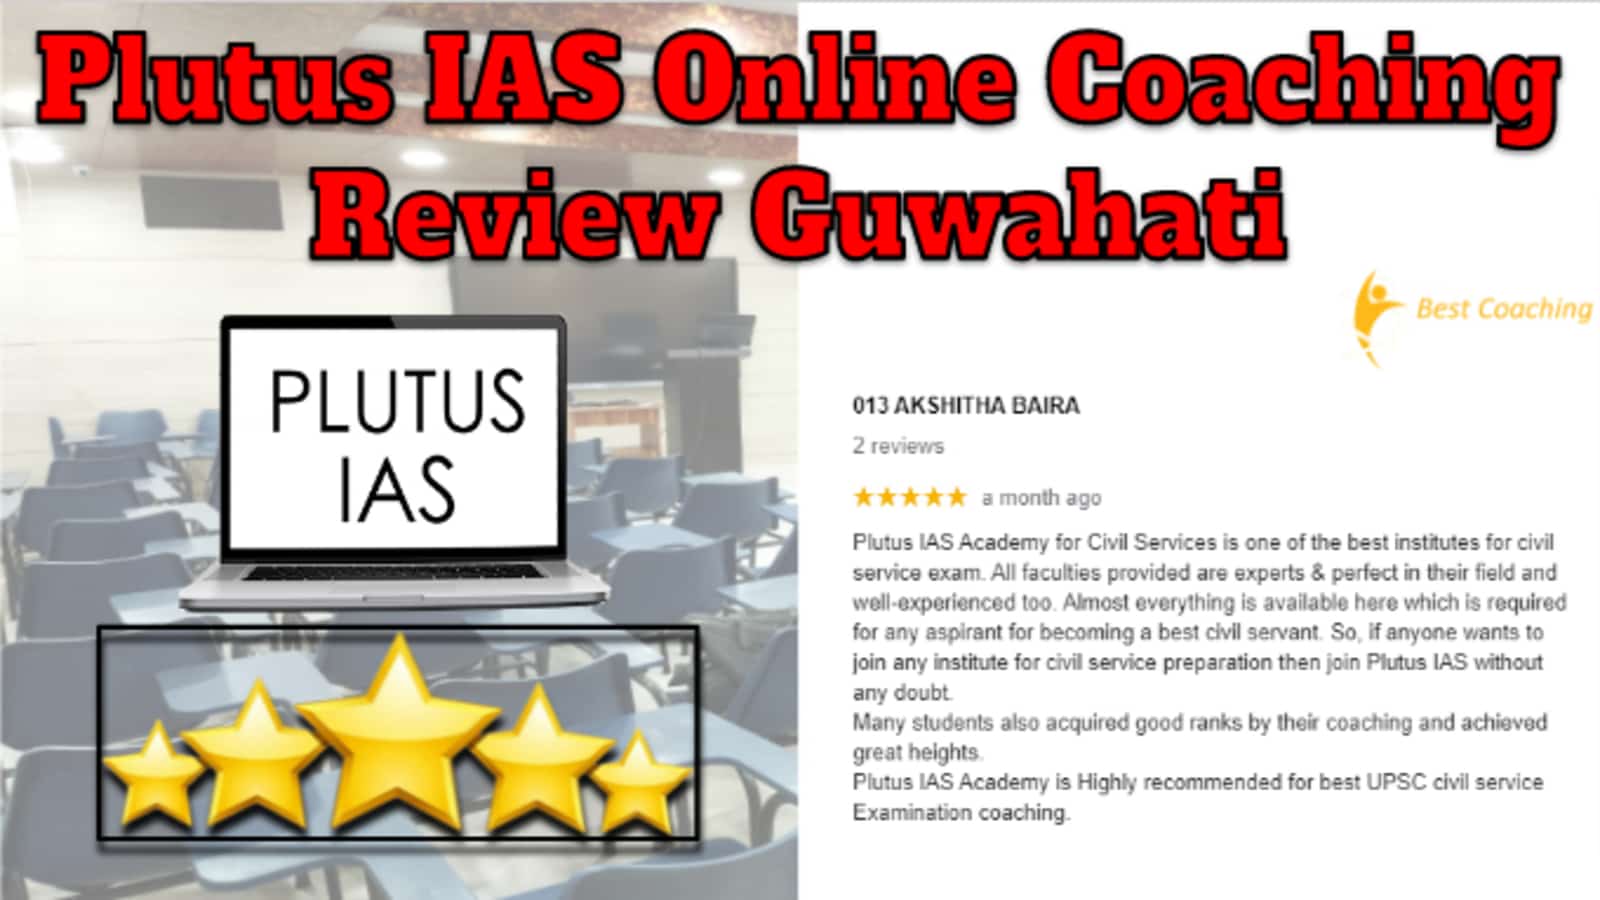 Plutus IAS Online Coaching Review Guwahati